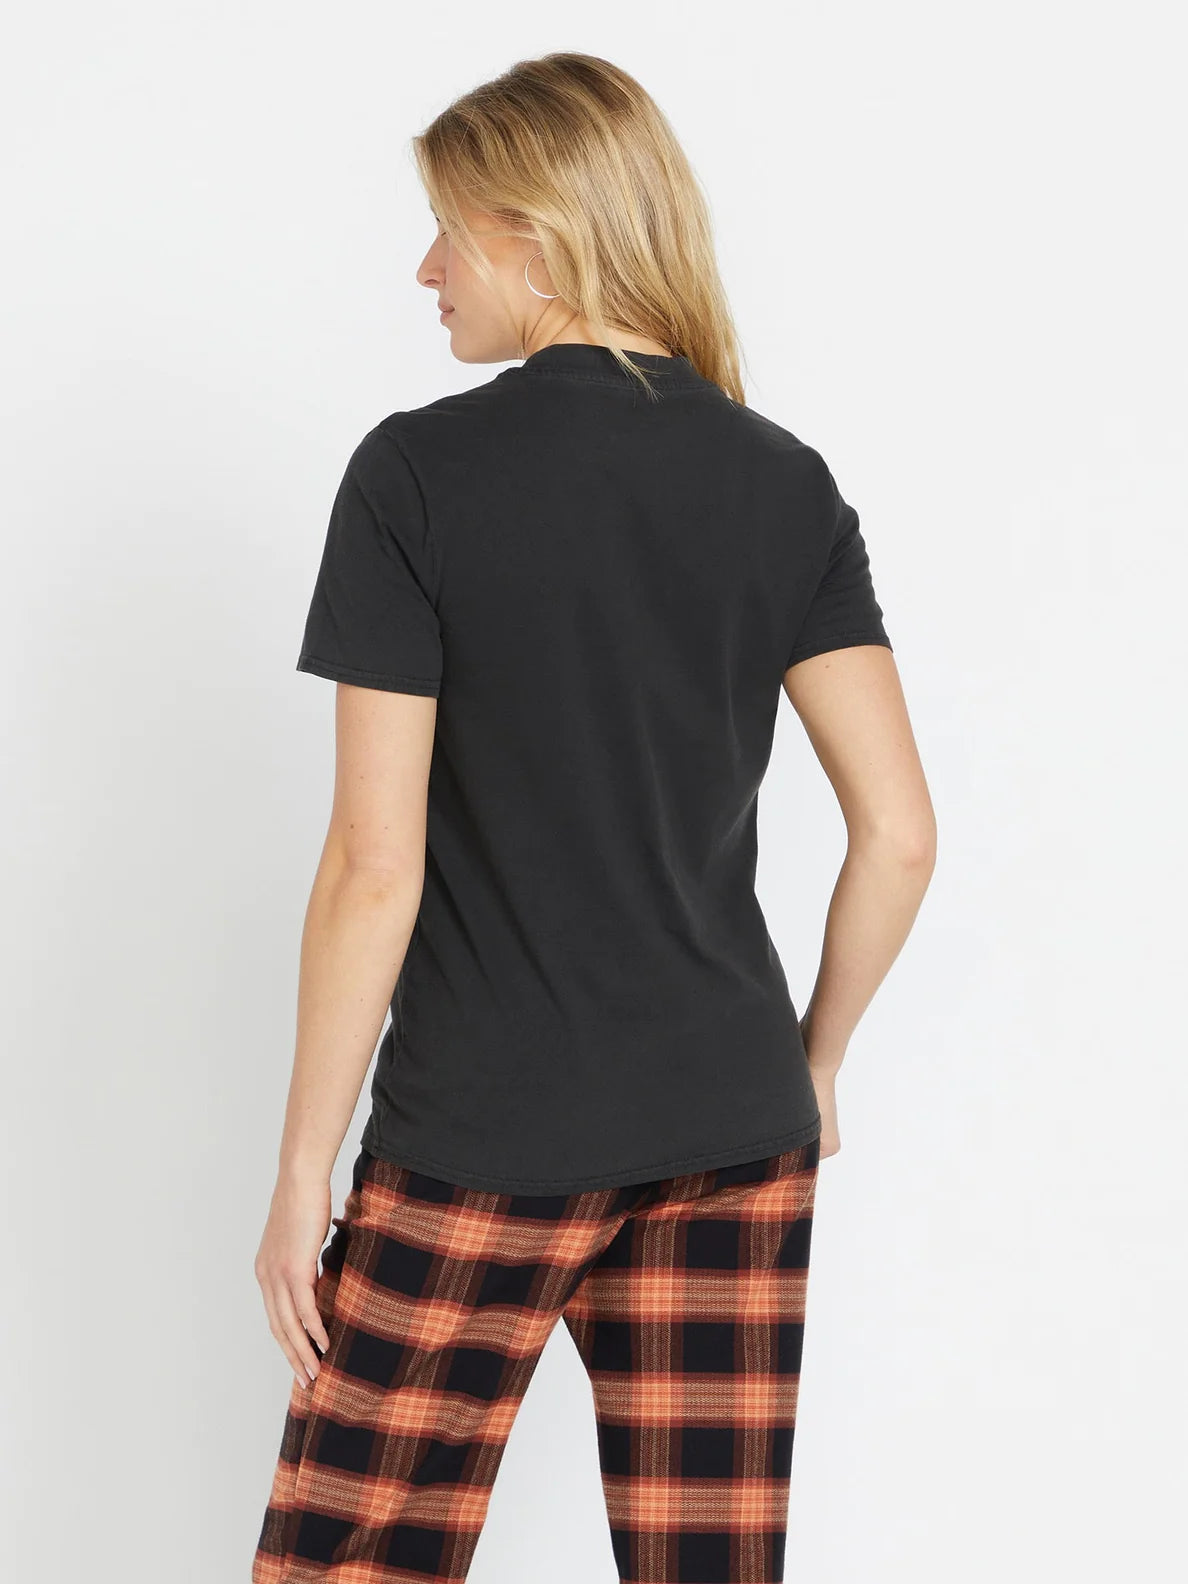 Camiseta Chica Volcom Lock It Up - Vintage Black | Camisetas manga corta de mujer | Volcom Shop | surfdevils.com